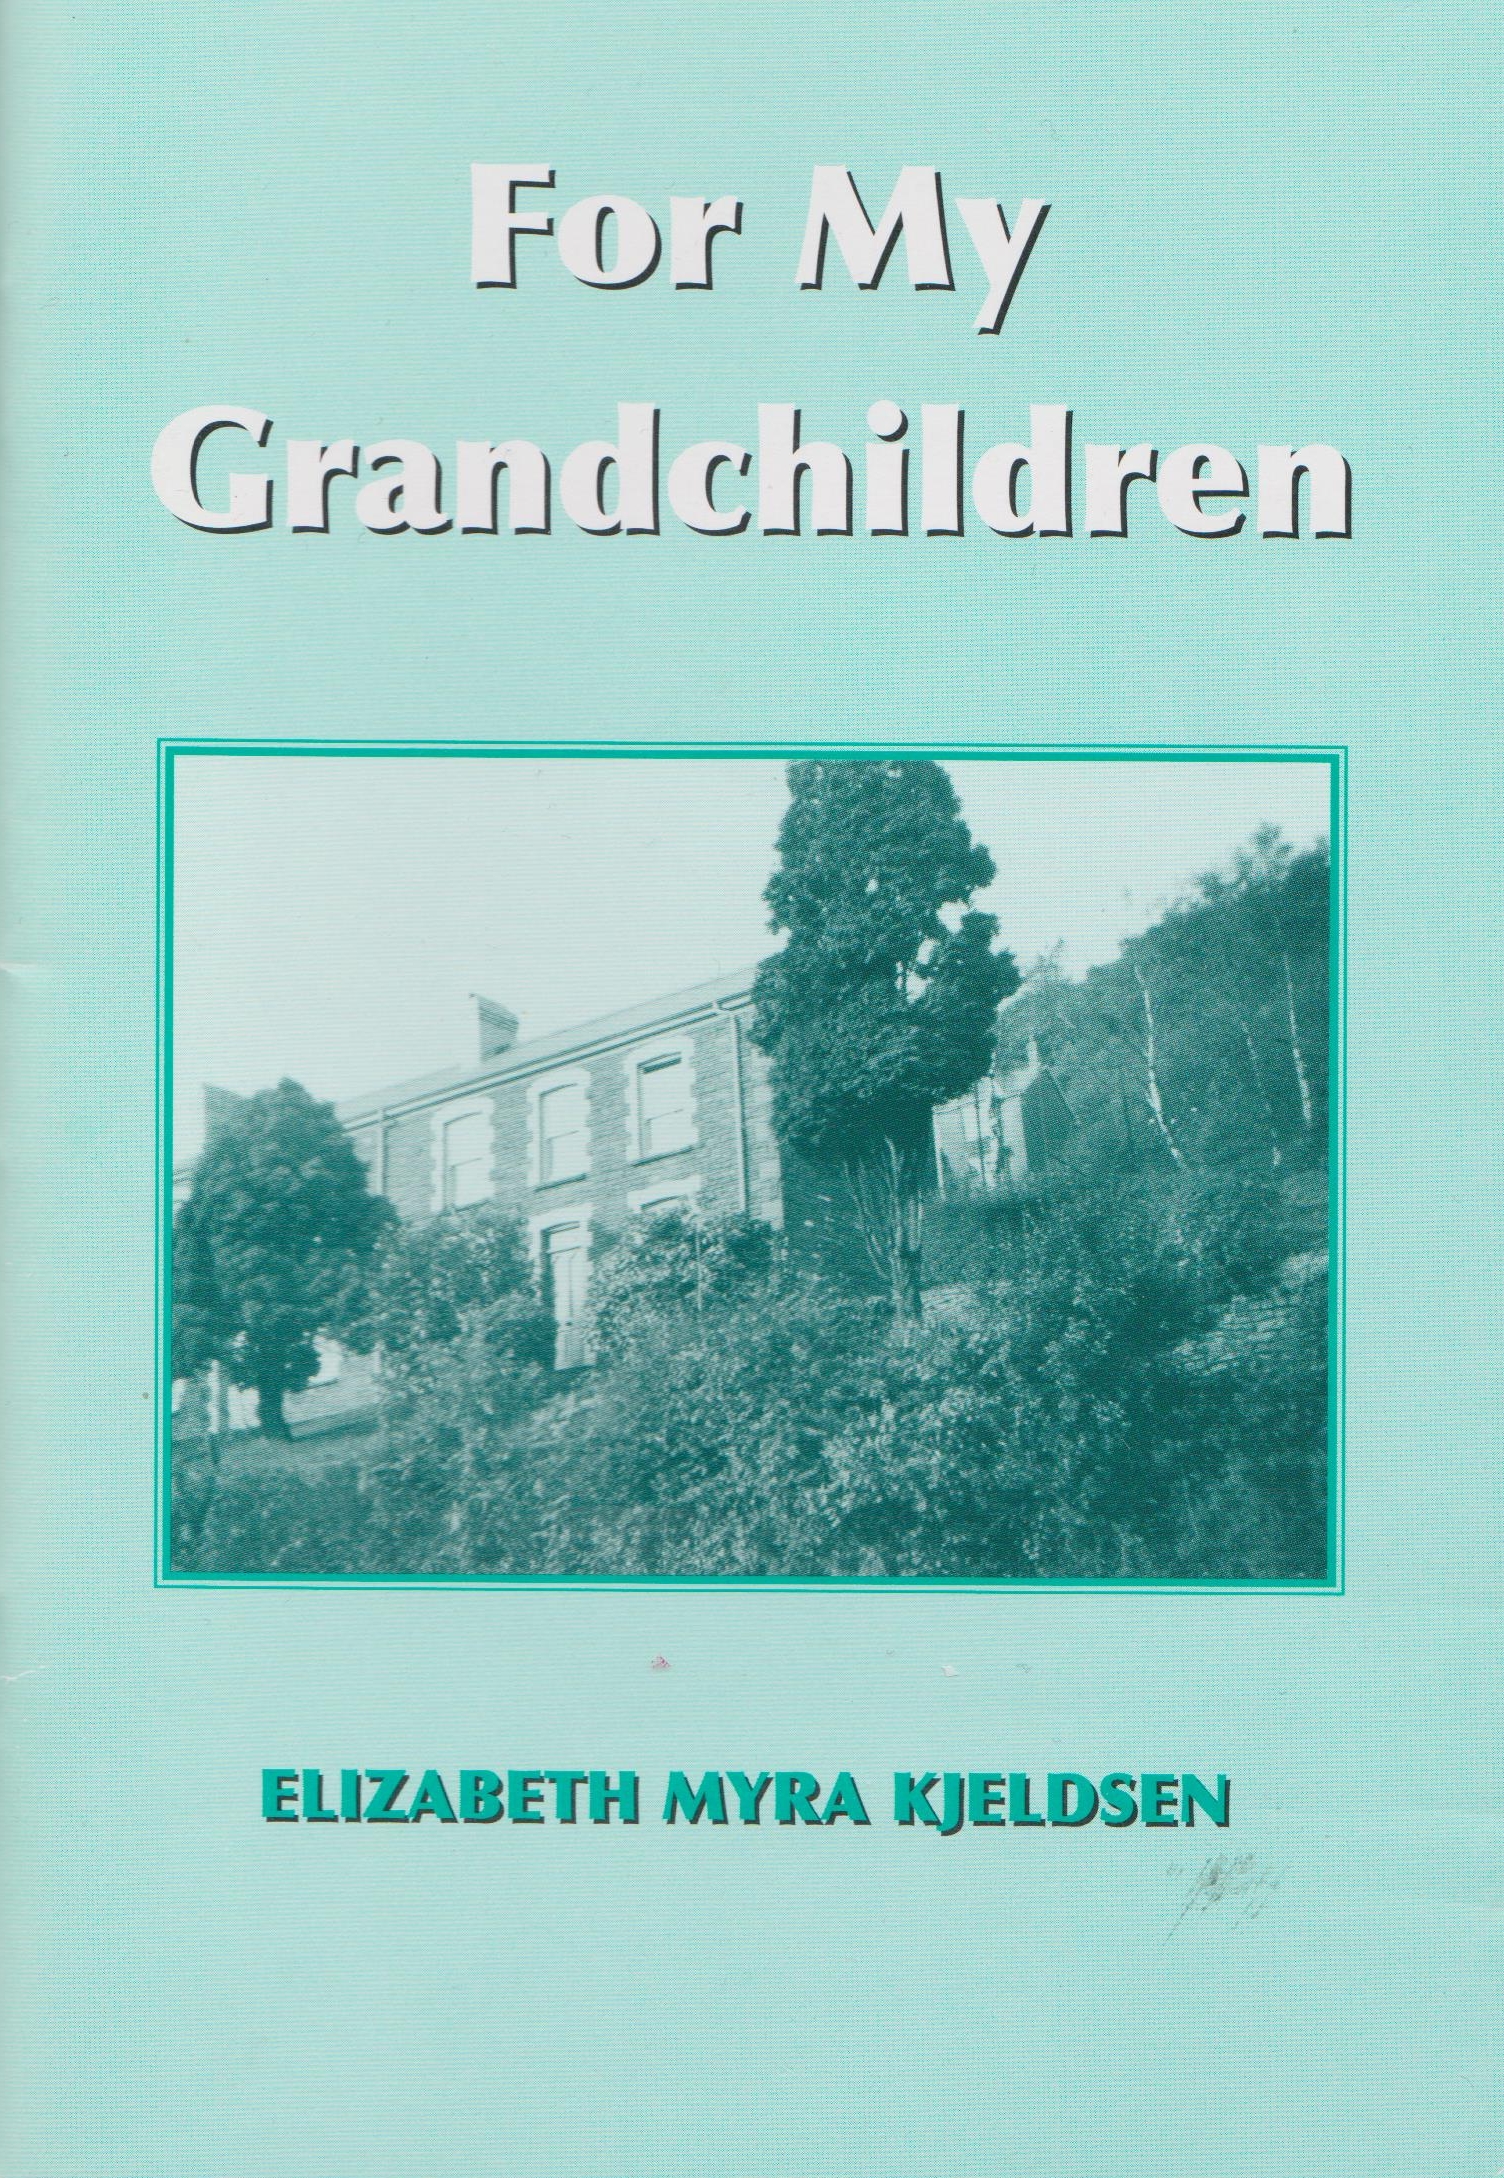 For My Grandchildren, by Elizabeth Myra Kjeldsen